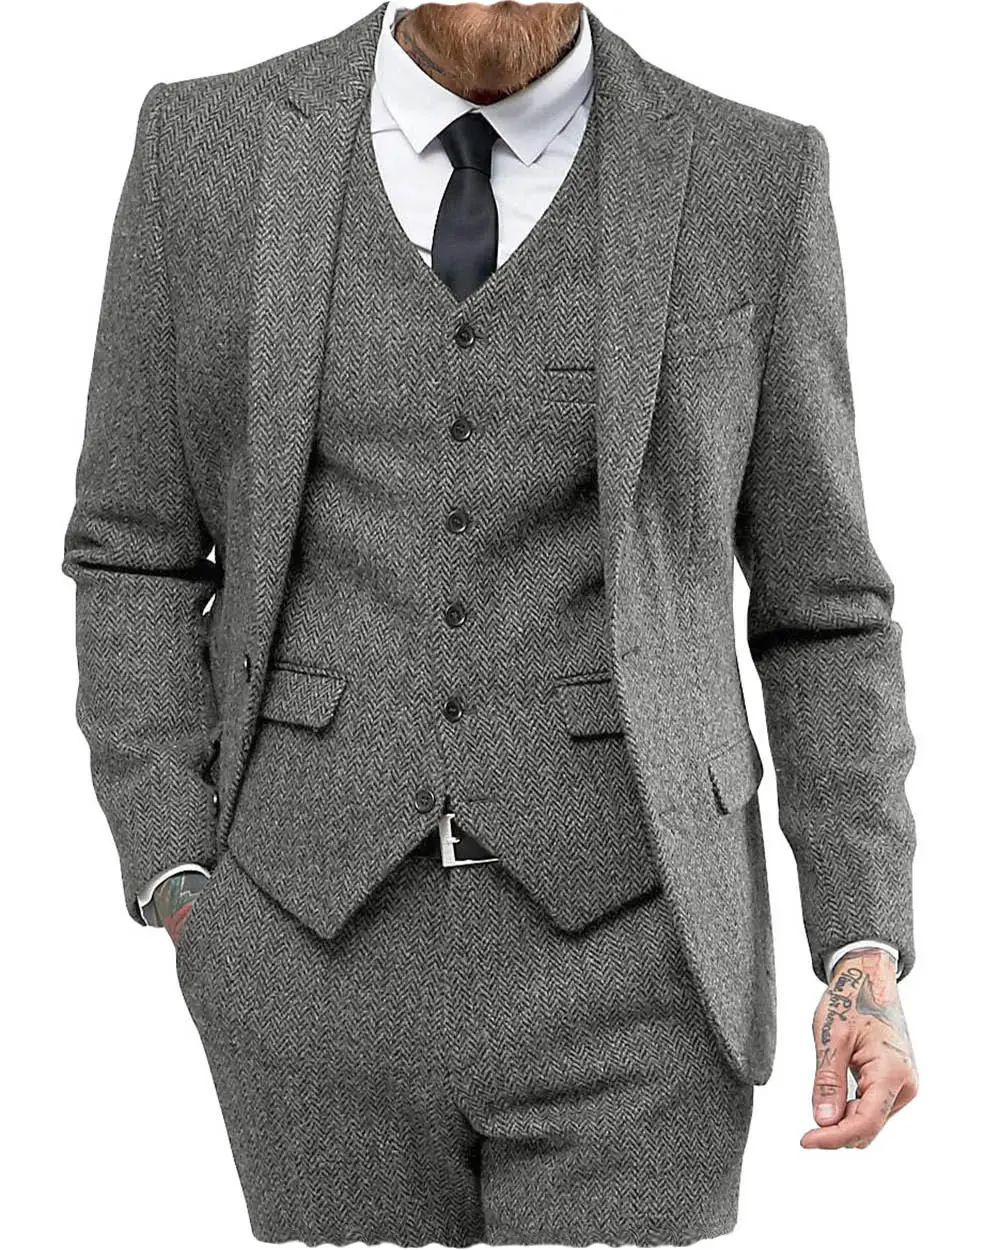 Men's suits business suit casual Korean suit jacket three-piece wedding dress trend